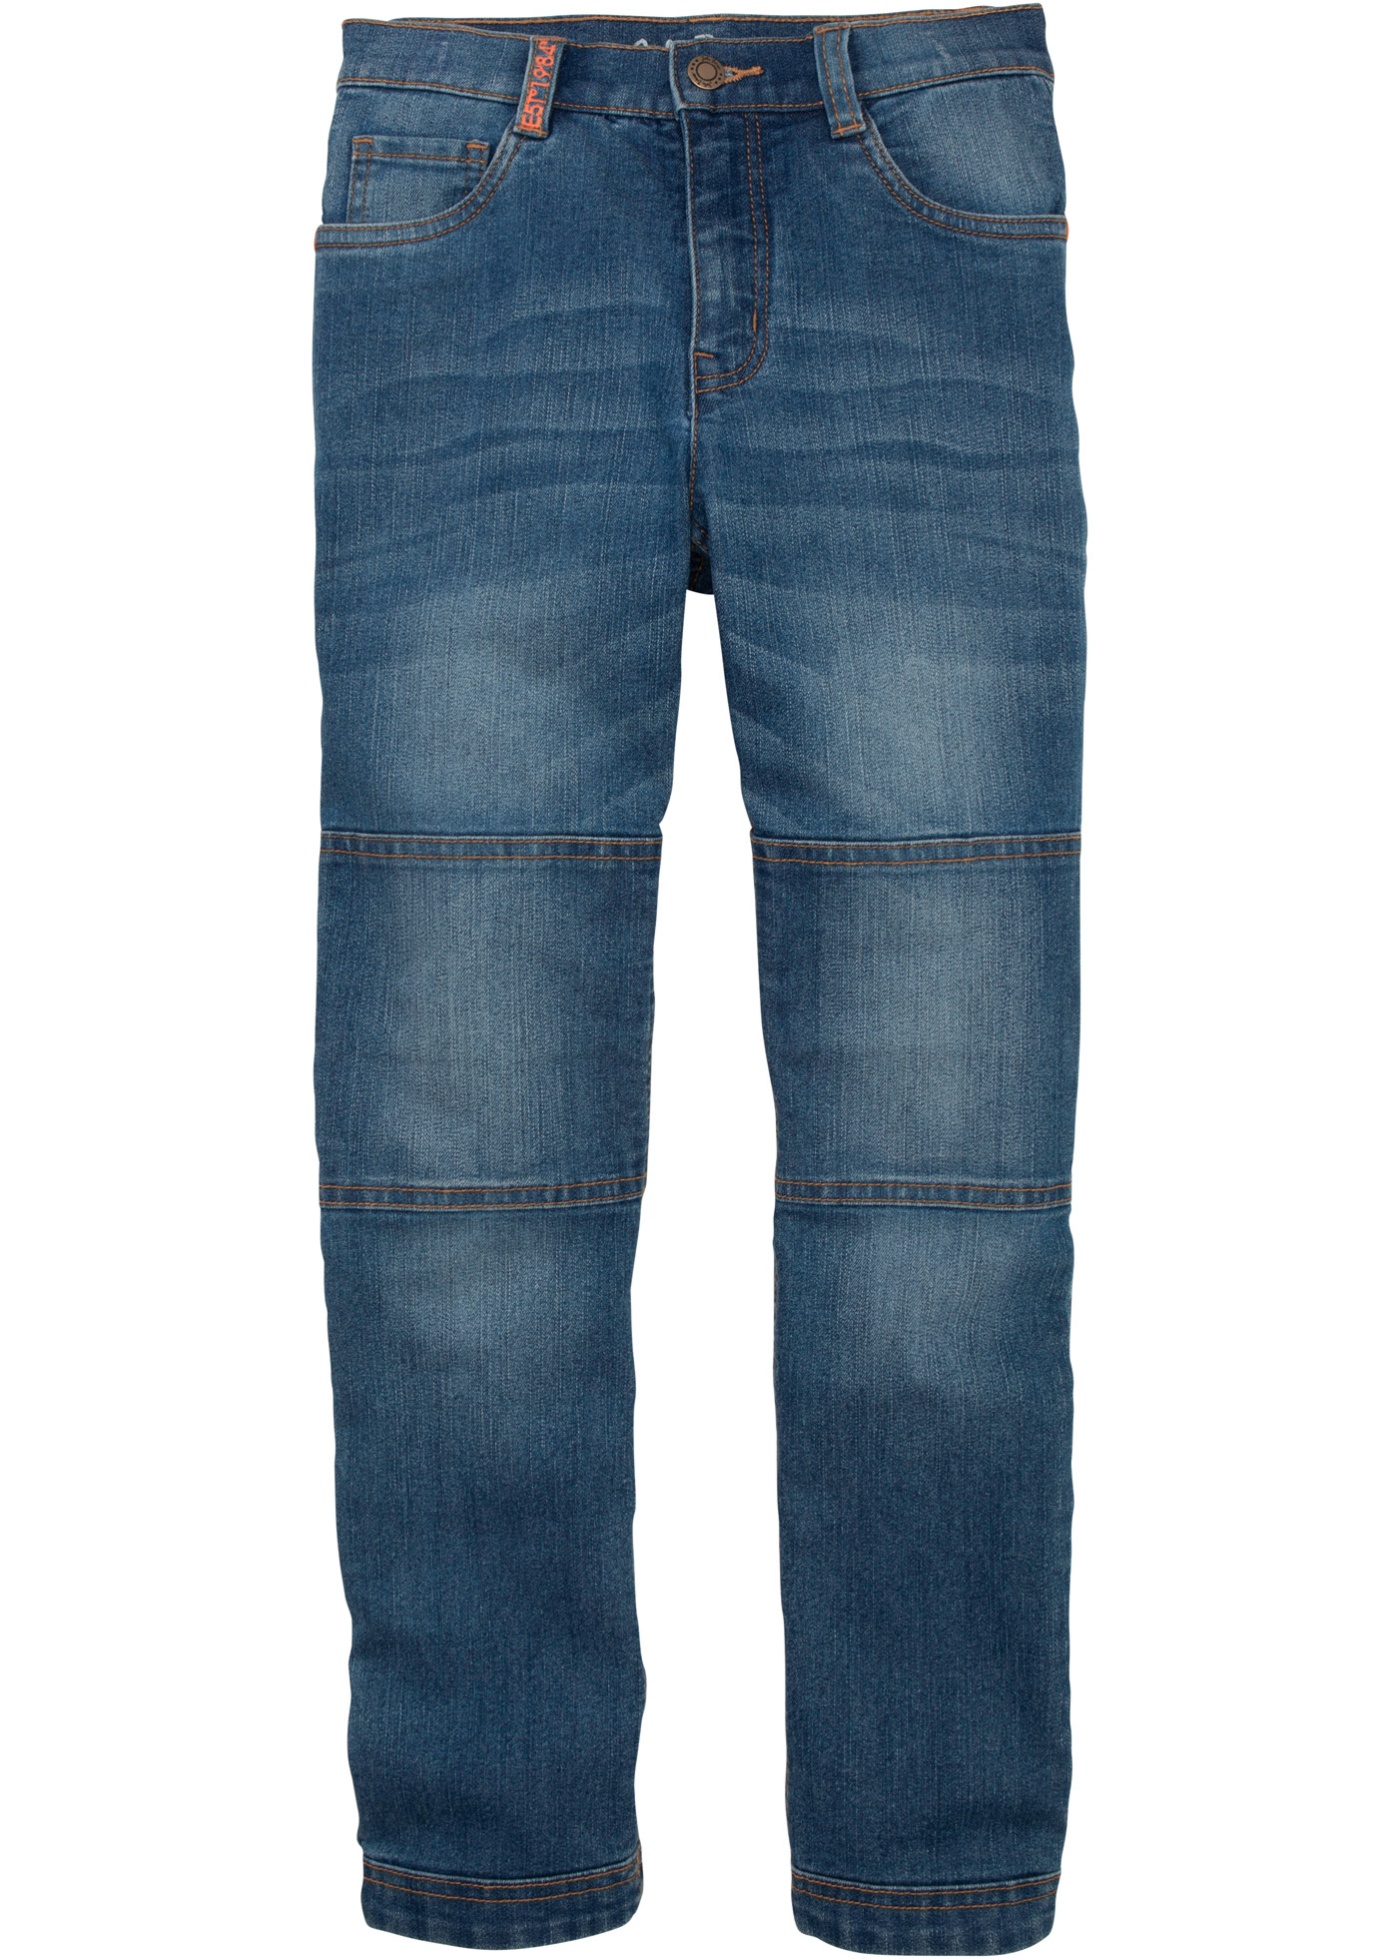 Jungen Jeans mit verstärkter Kniepartie, Regular Fit